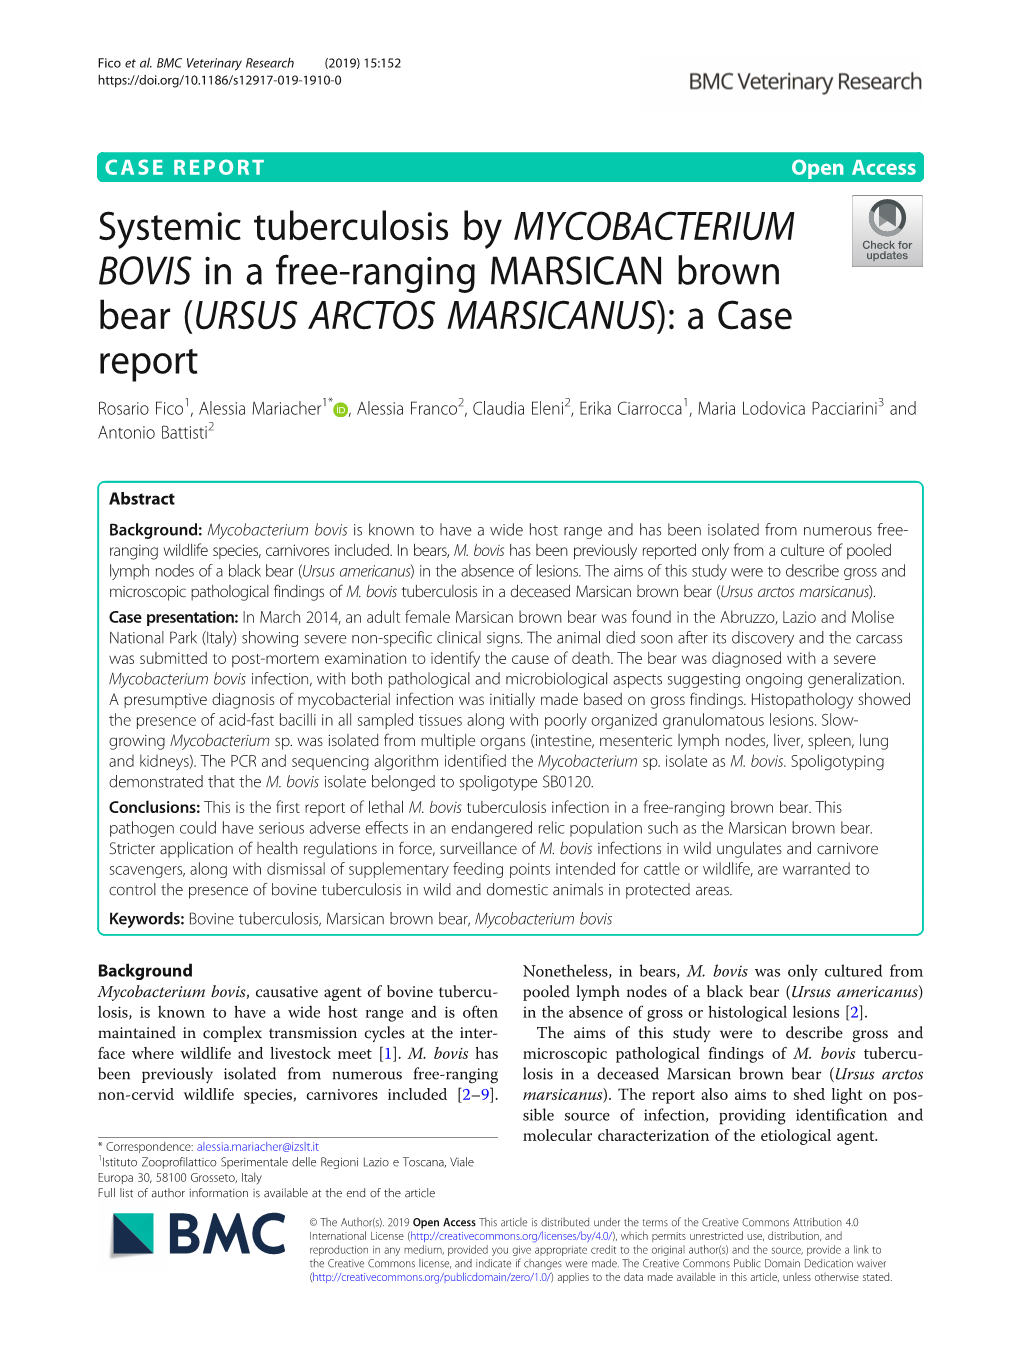 Systemic Tuberculosis by MYCOBACTERIUM BOVIS in a Free-Ranging MARSICAN Brown Bear (URSUS ARCTOS MARSICANUS): a Case Report